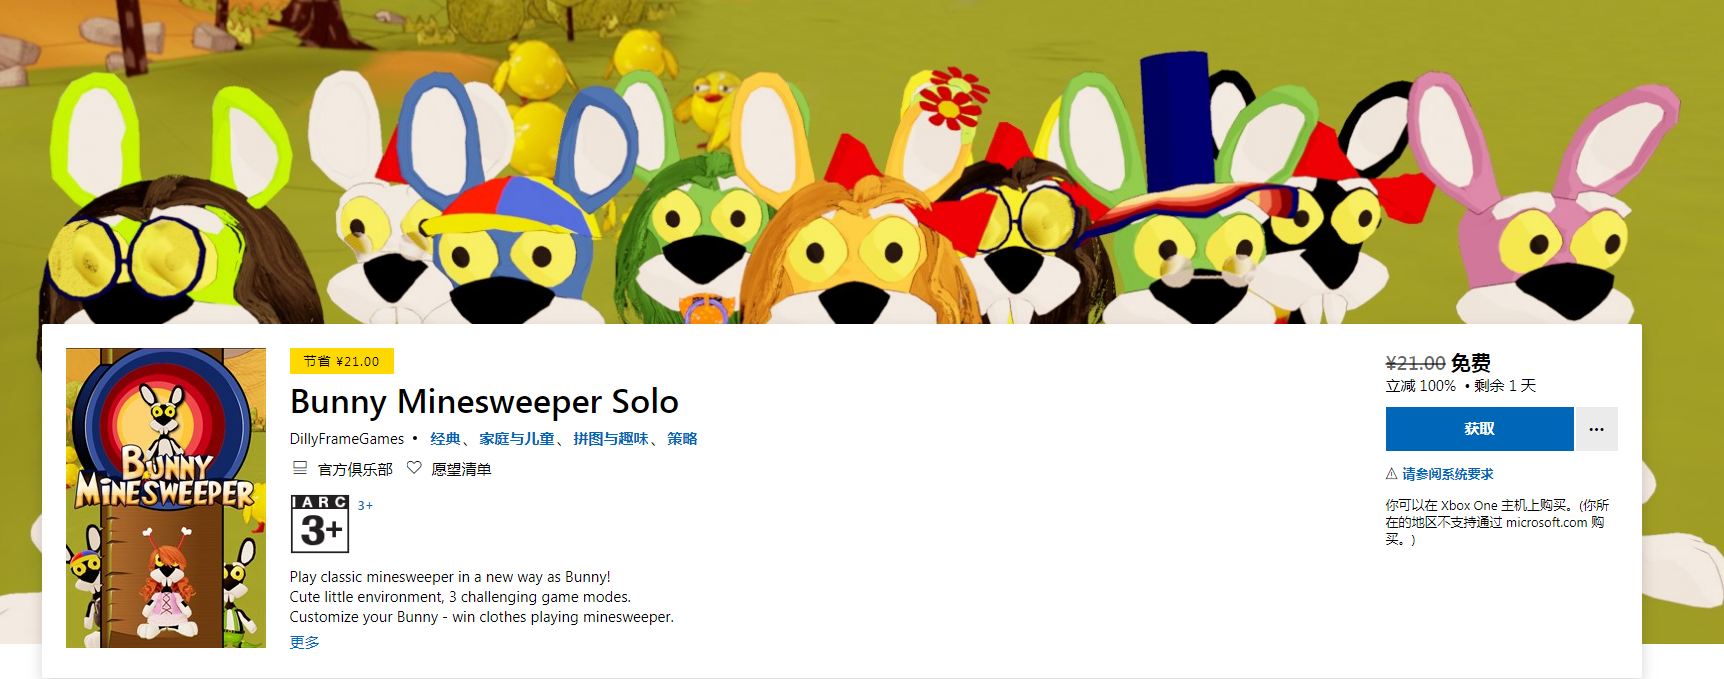 喜加一：微软商城免费领趣味游戏《Bunny Minesweeper Solo》